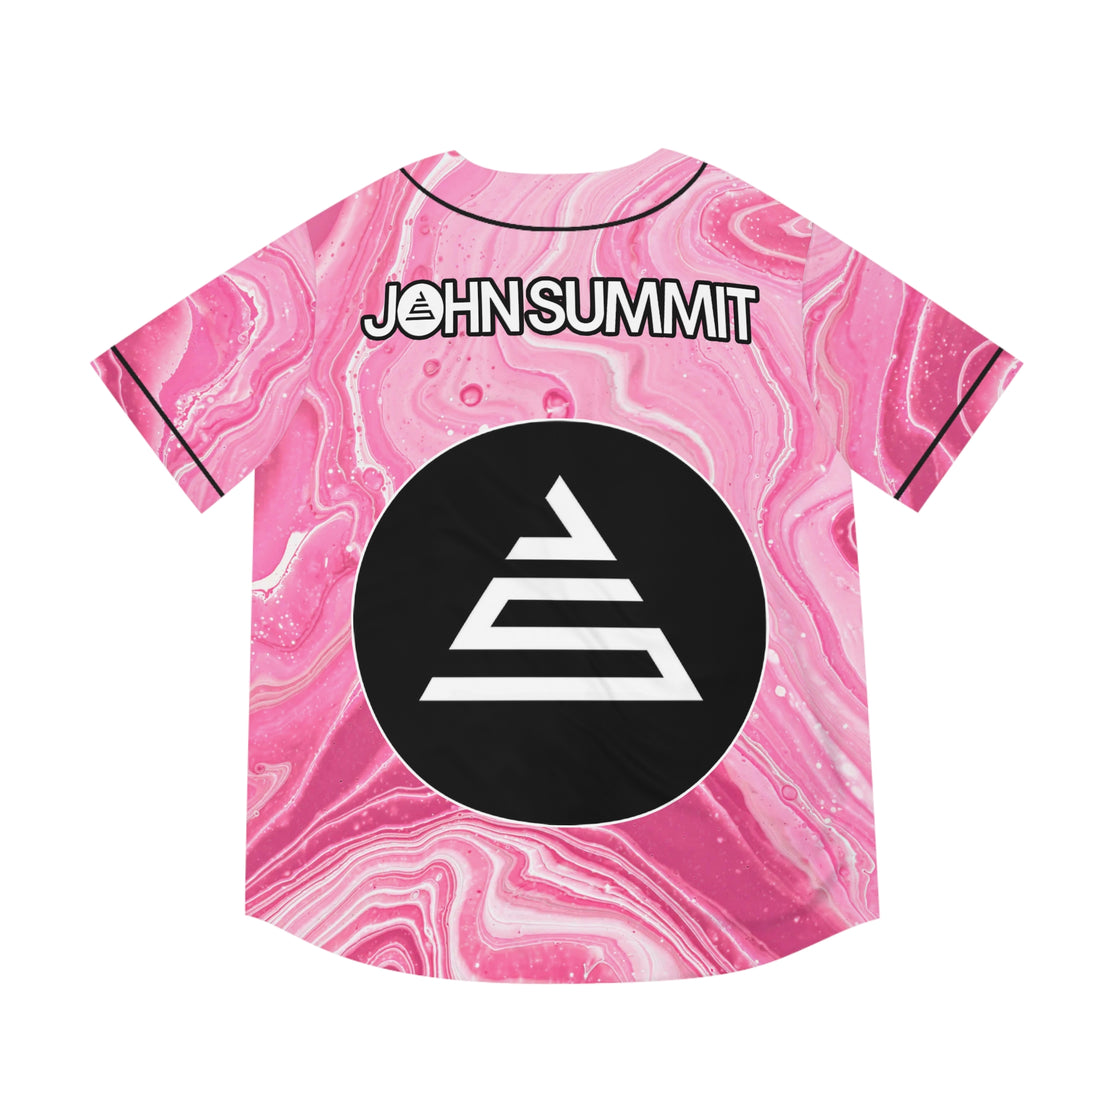 John Summit Jersey (Pink EDM RAVE Jersey)